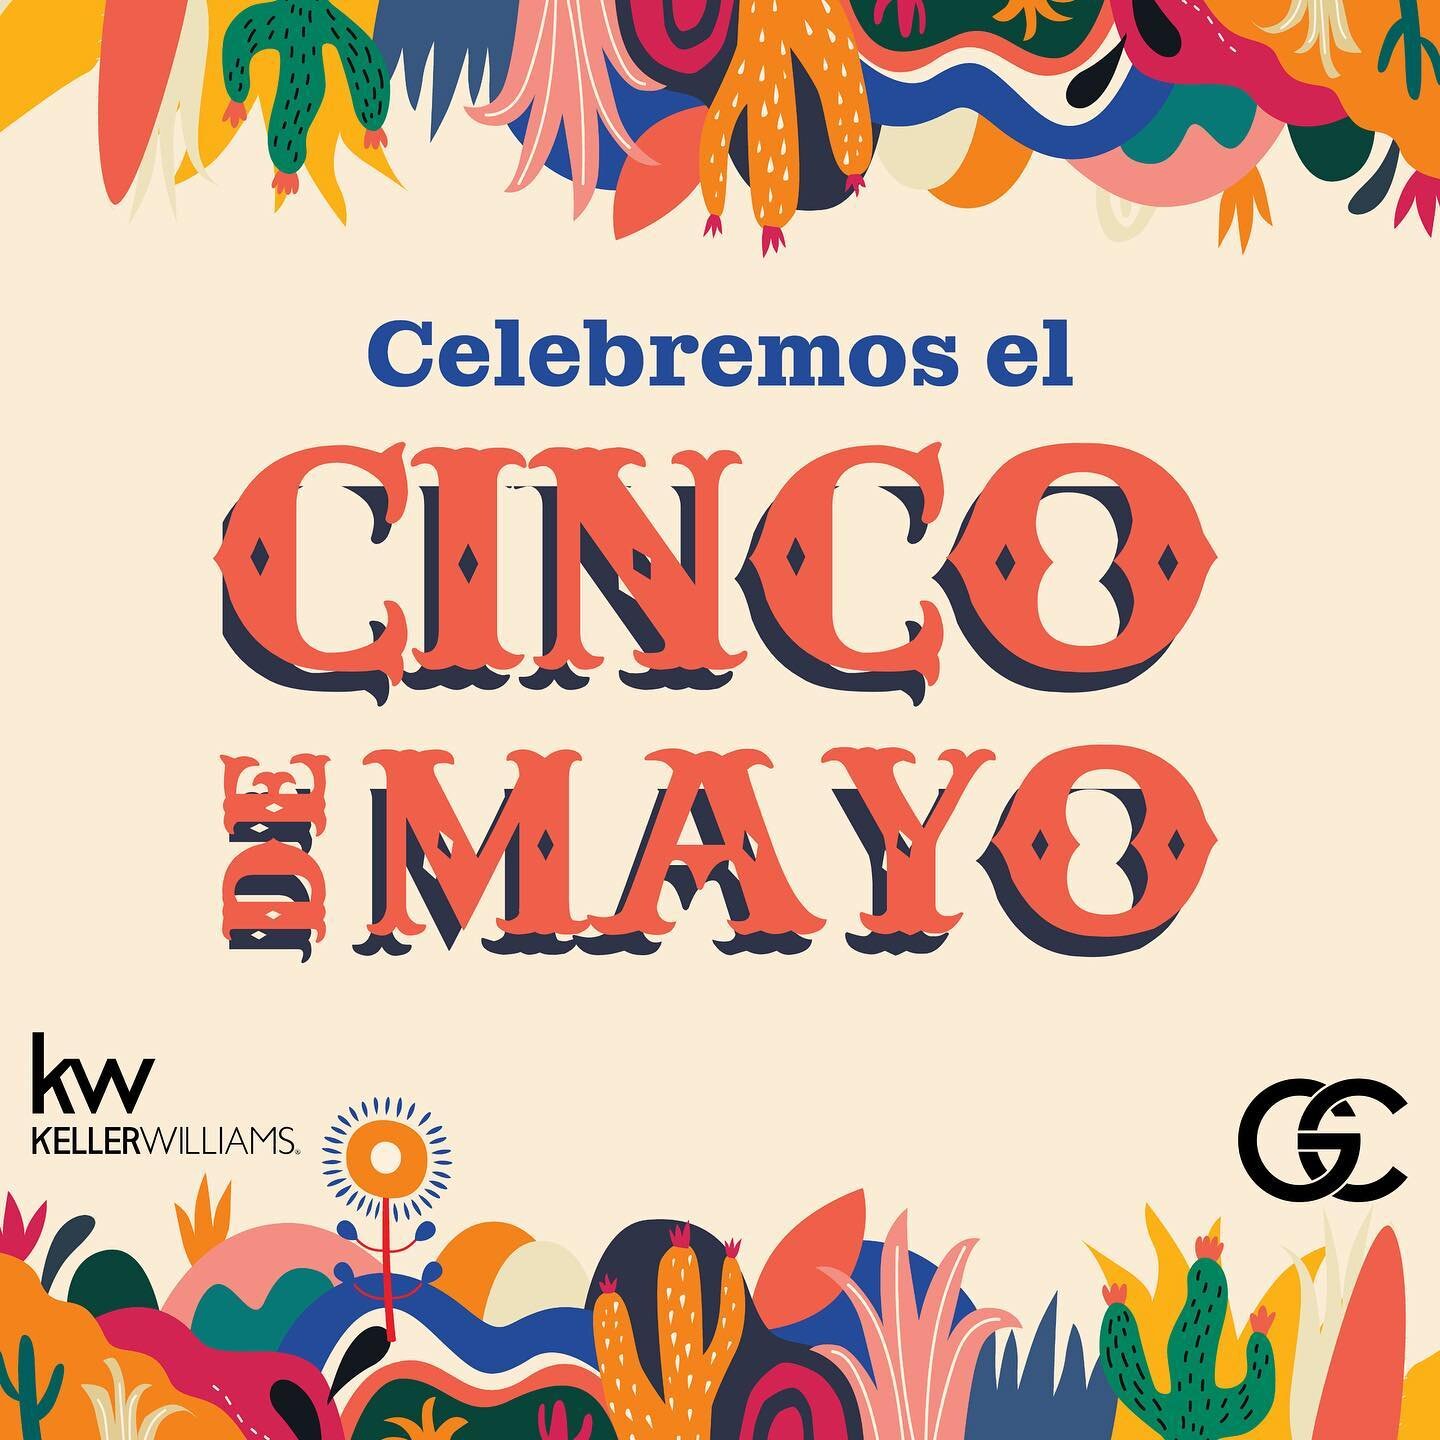 Feliz Cinco de Mayo! Have a blast celebrating 🥳 today! #needham #newtonma #wellesley #brookline #natick #tacos #cincodemayo #tequilla #celebration